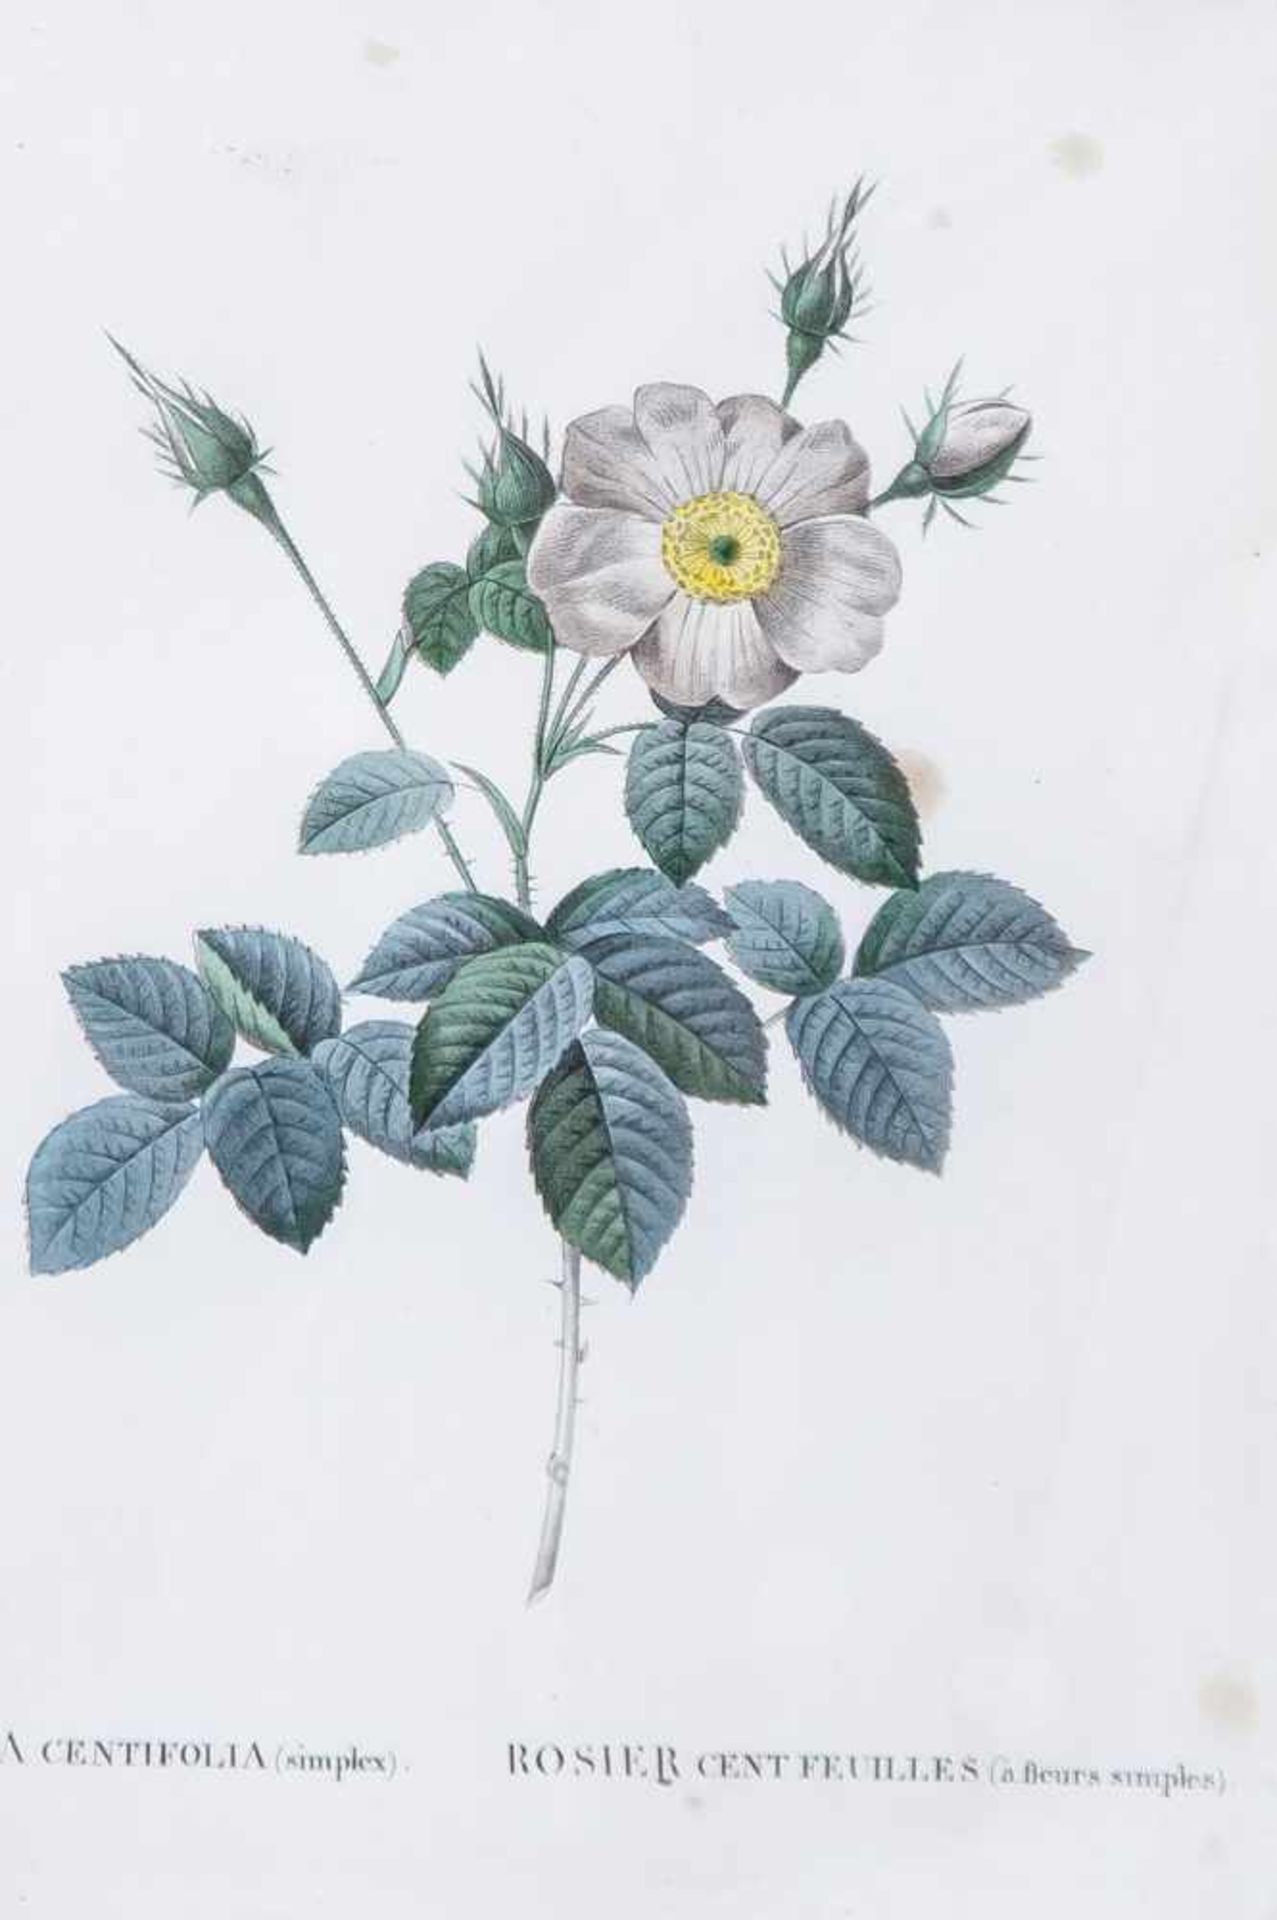 Nach Redouté, Pierre-Joseph (1759-1840), "Rosa Centifolia simplex", kolorierter Kupferstich,